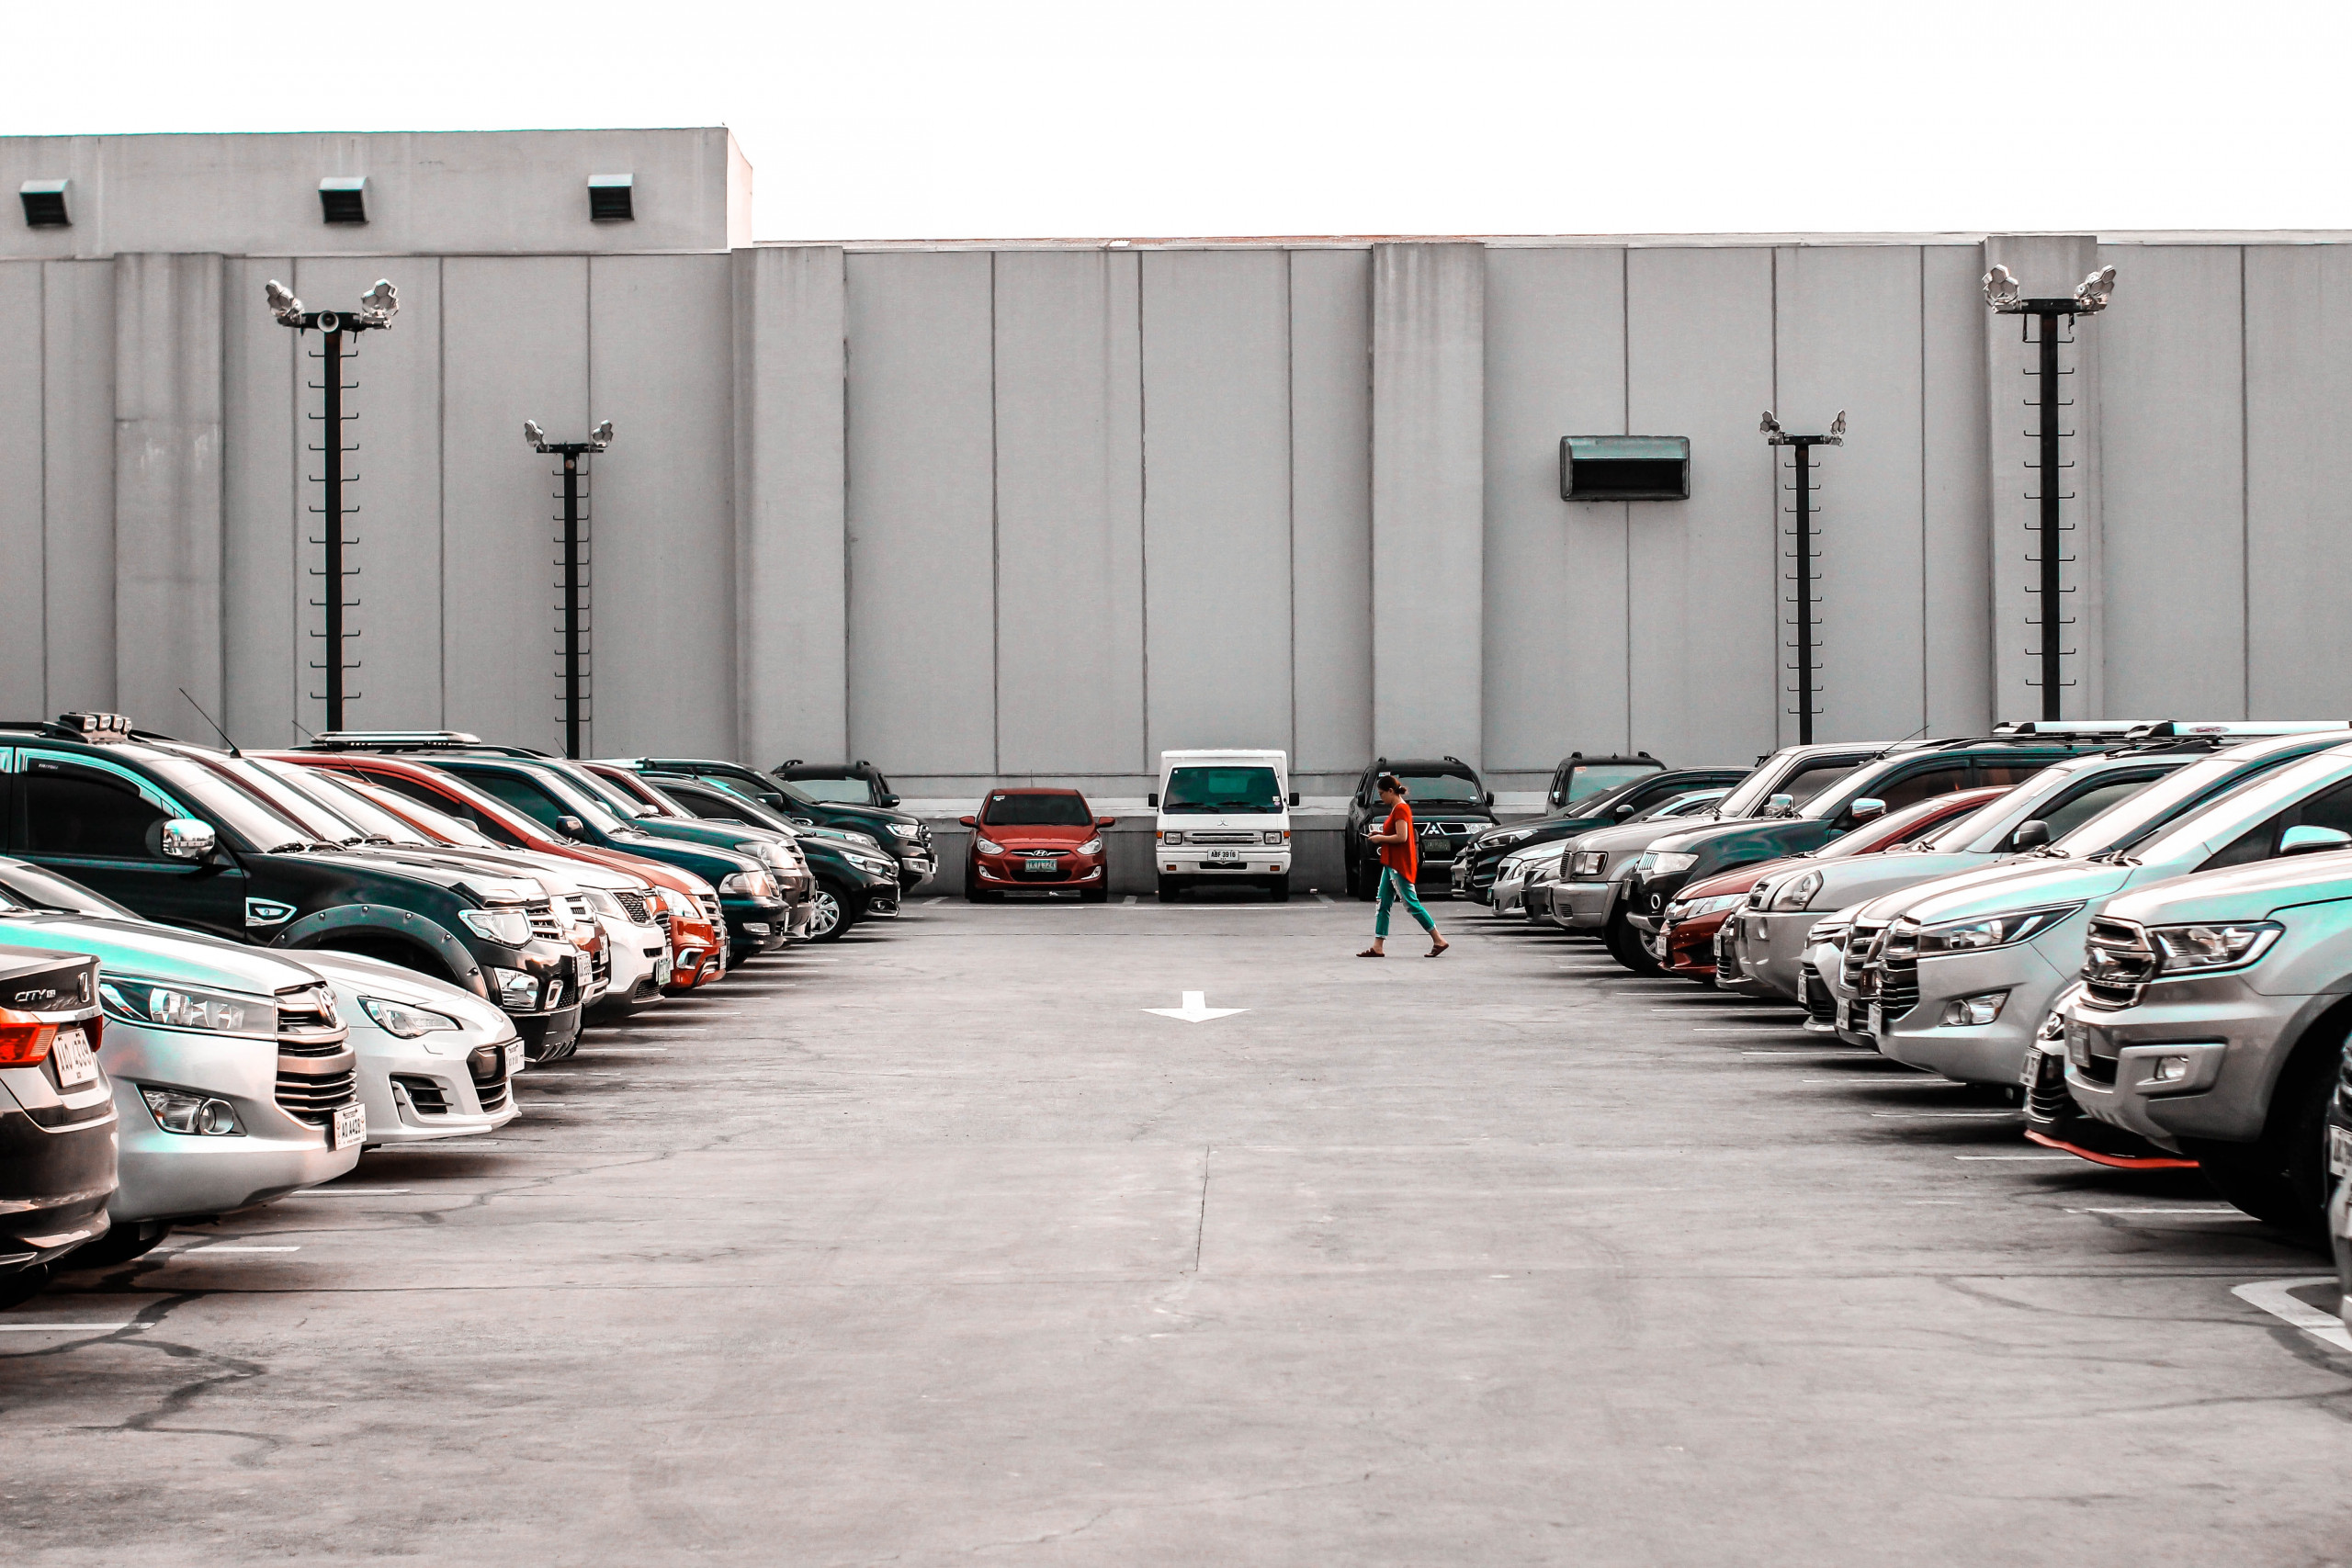 Full parking lot of cars